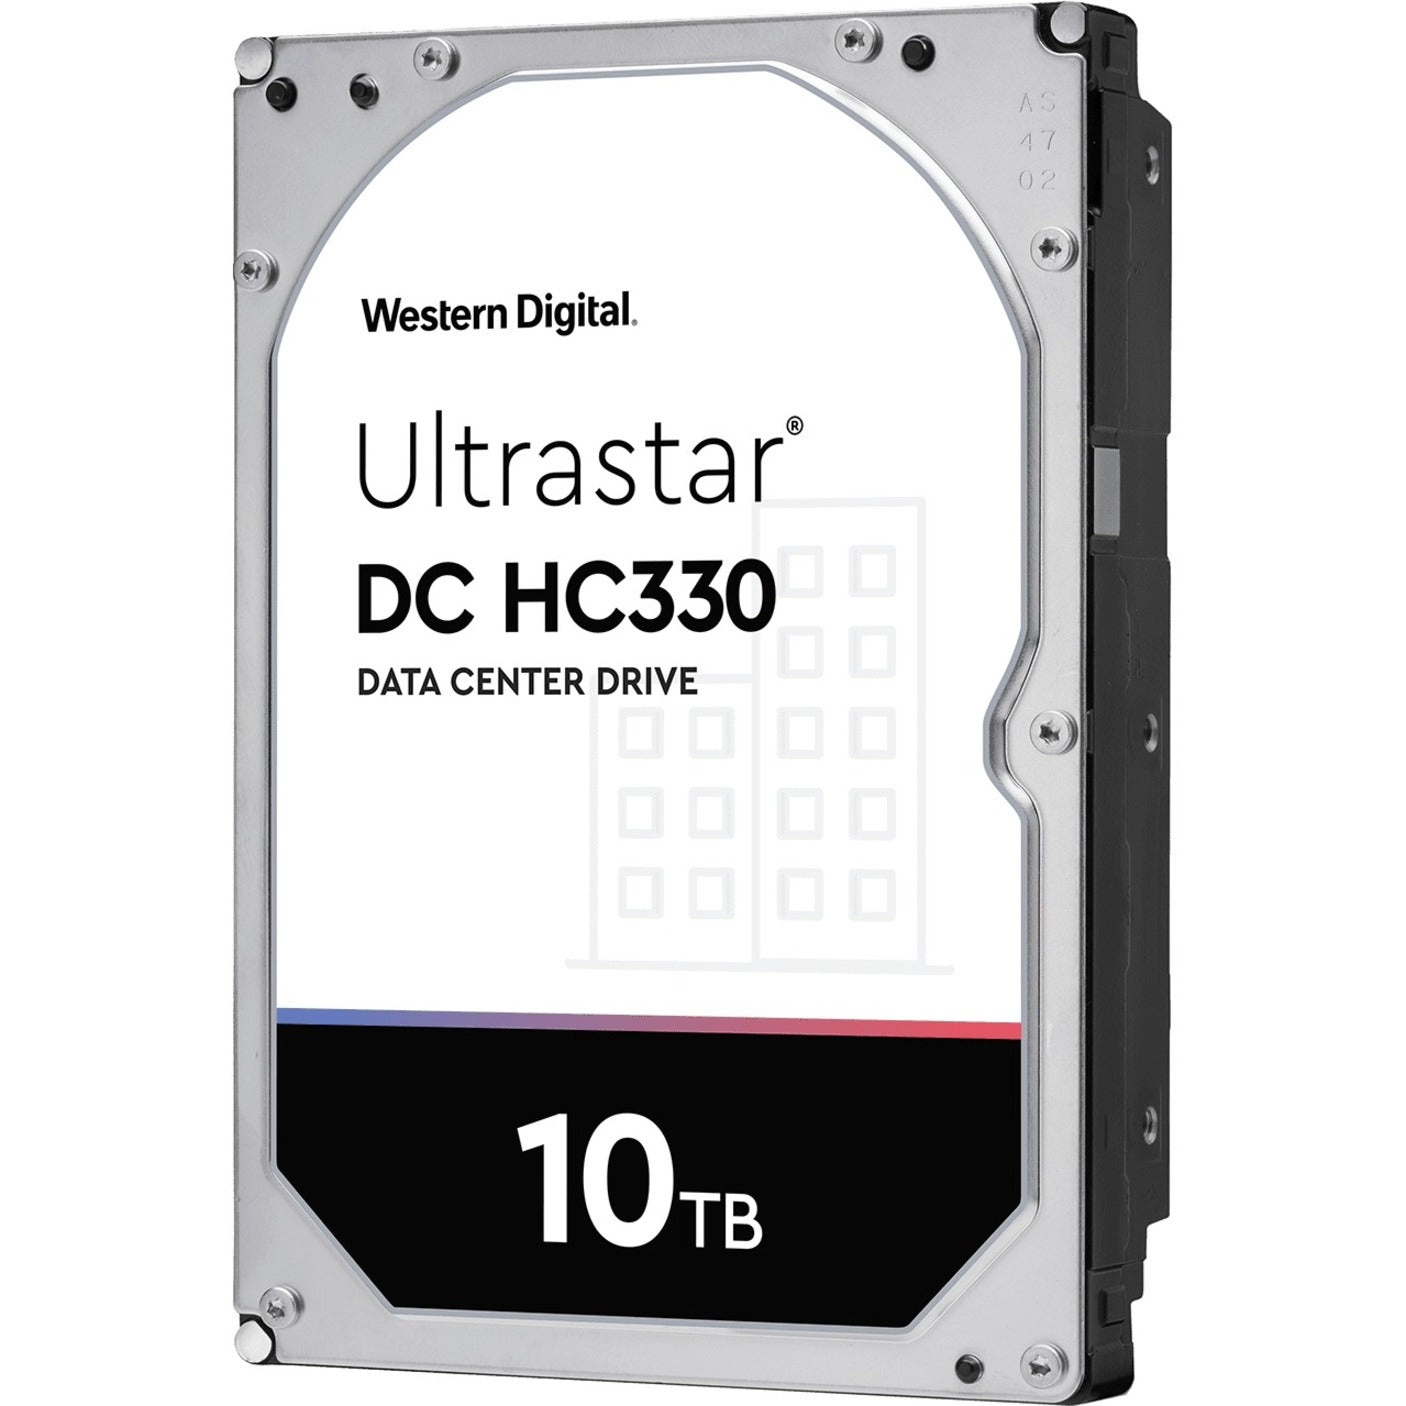 Western Digital Ultrastar DC HC330 WUS721010ALE6L1 10 TB Hard Drive - 3.5" Internal - SATA (SATA/600)